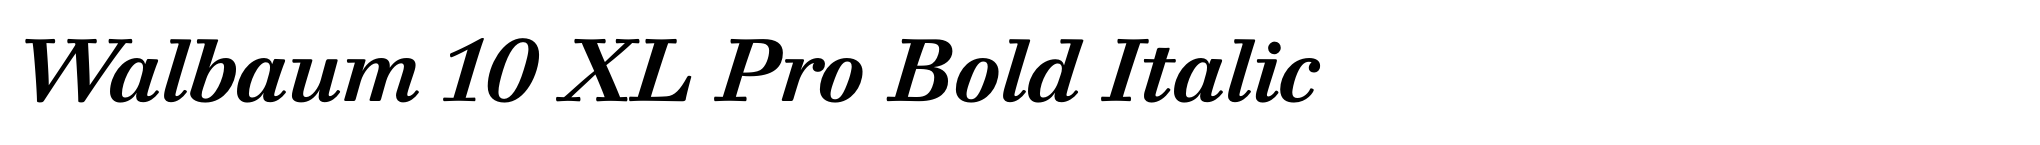 Walbaum 10 XL Pro Bold Italic image